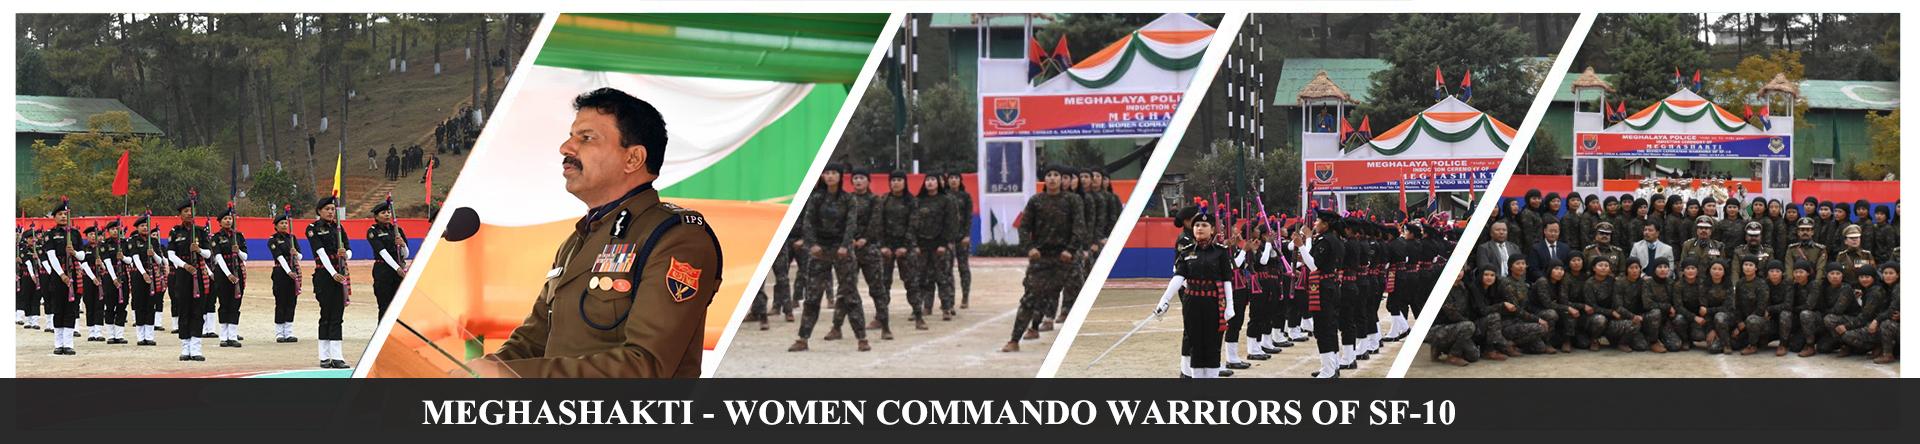 Meghashakti - Women Commando Warriors of SF-10